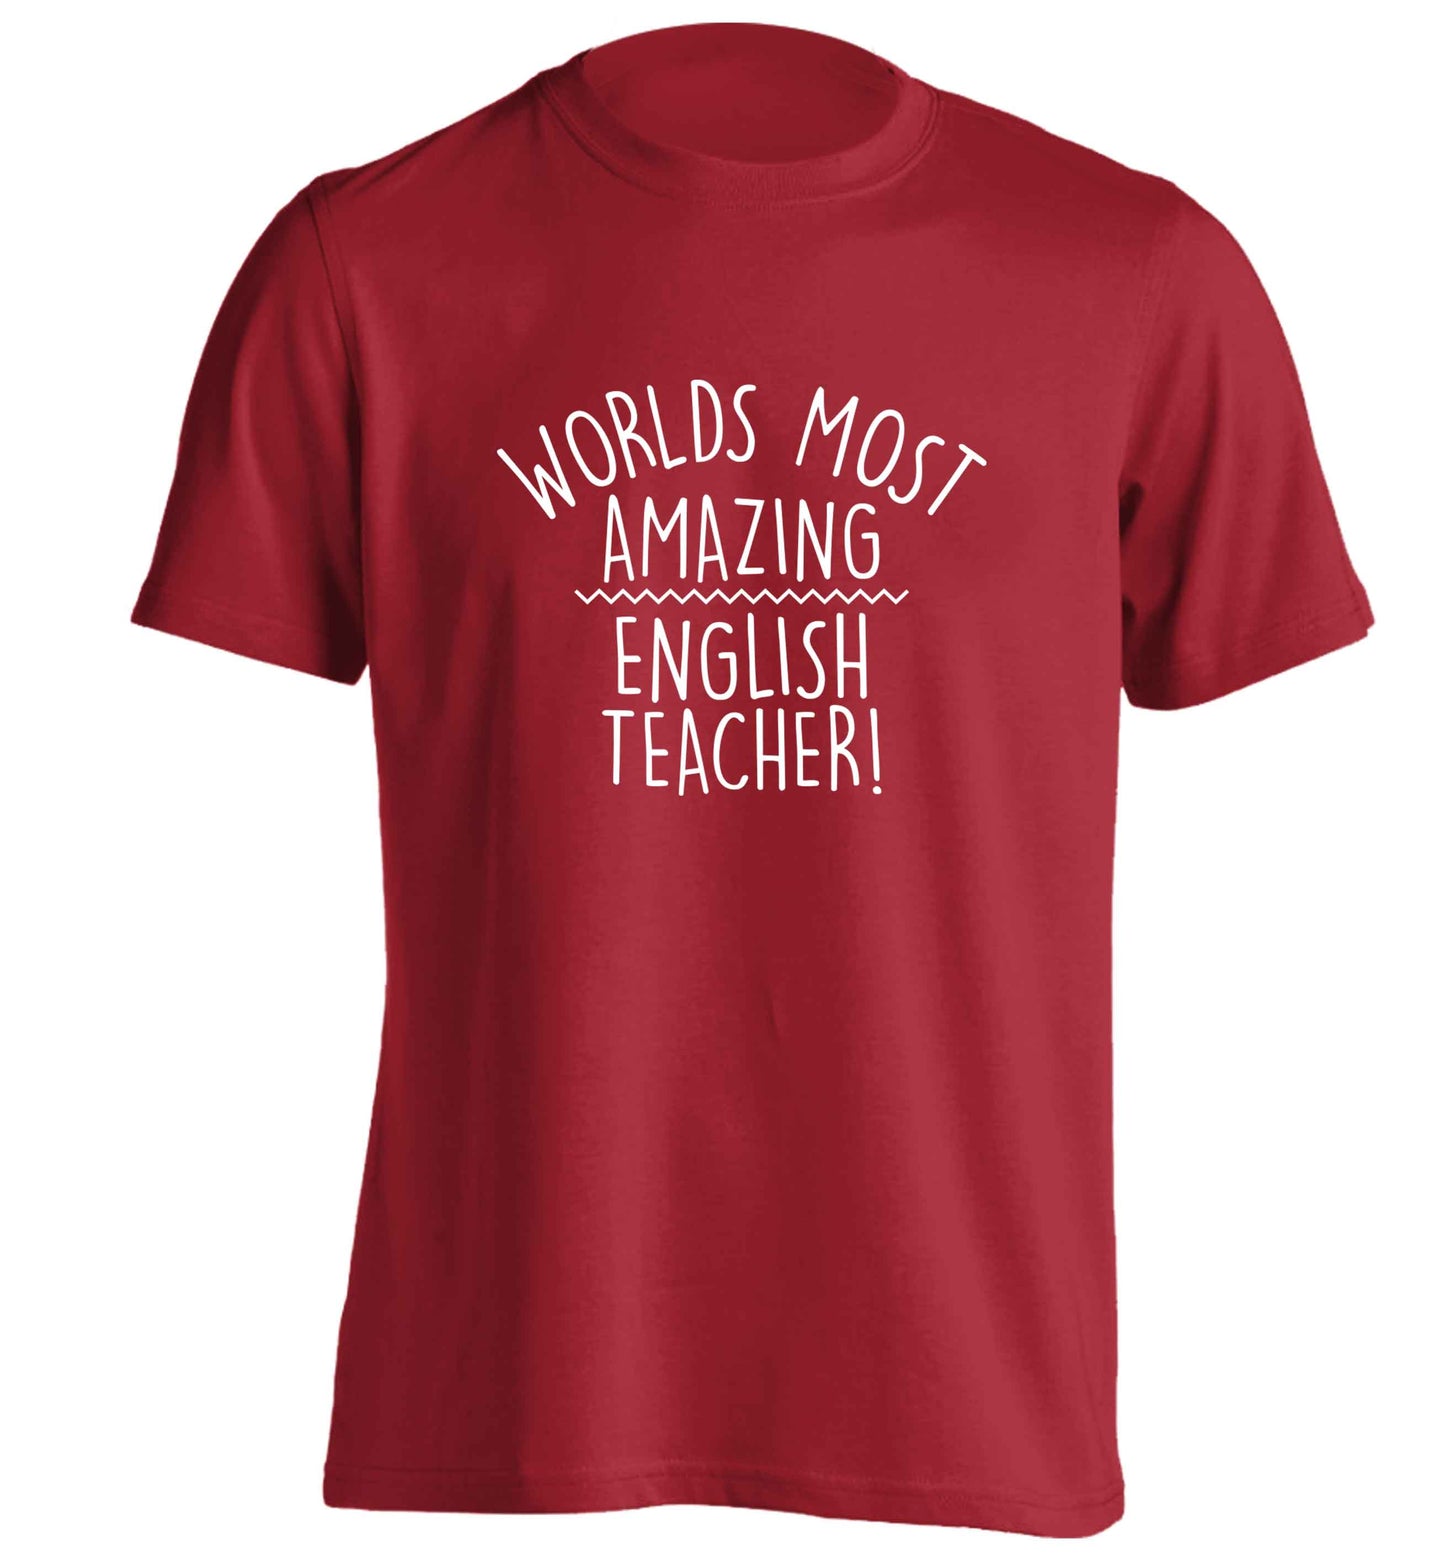 Worlds most amazing English teacher adults unisex red Tshirt 2XL